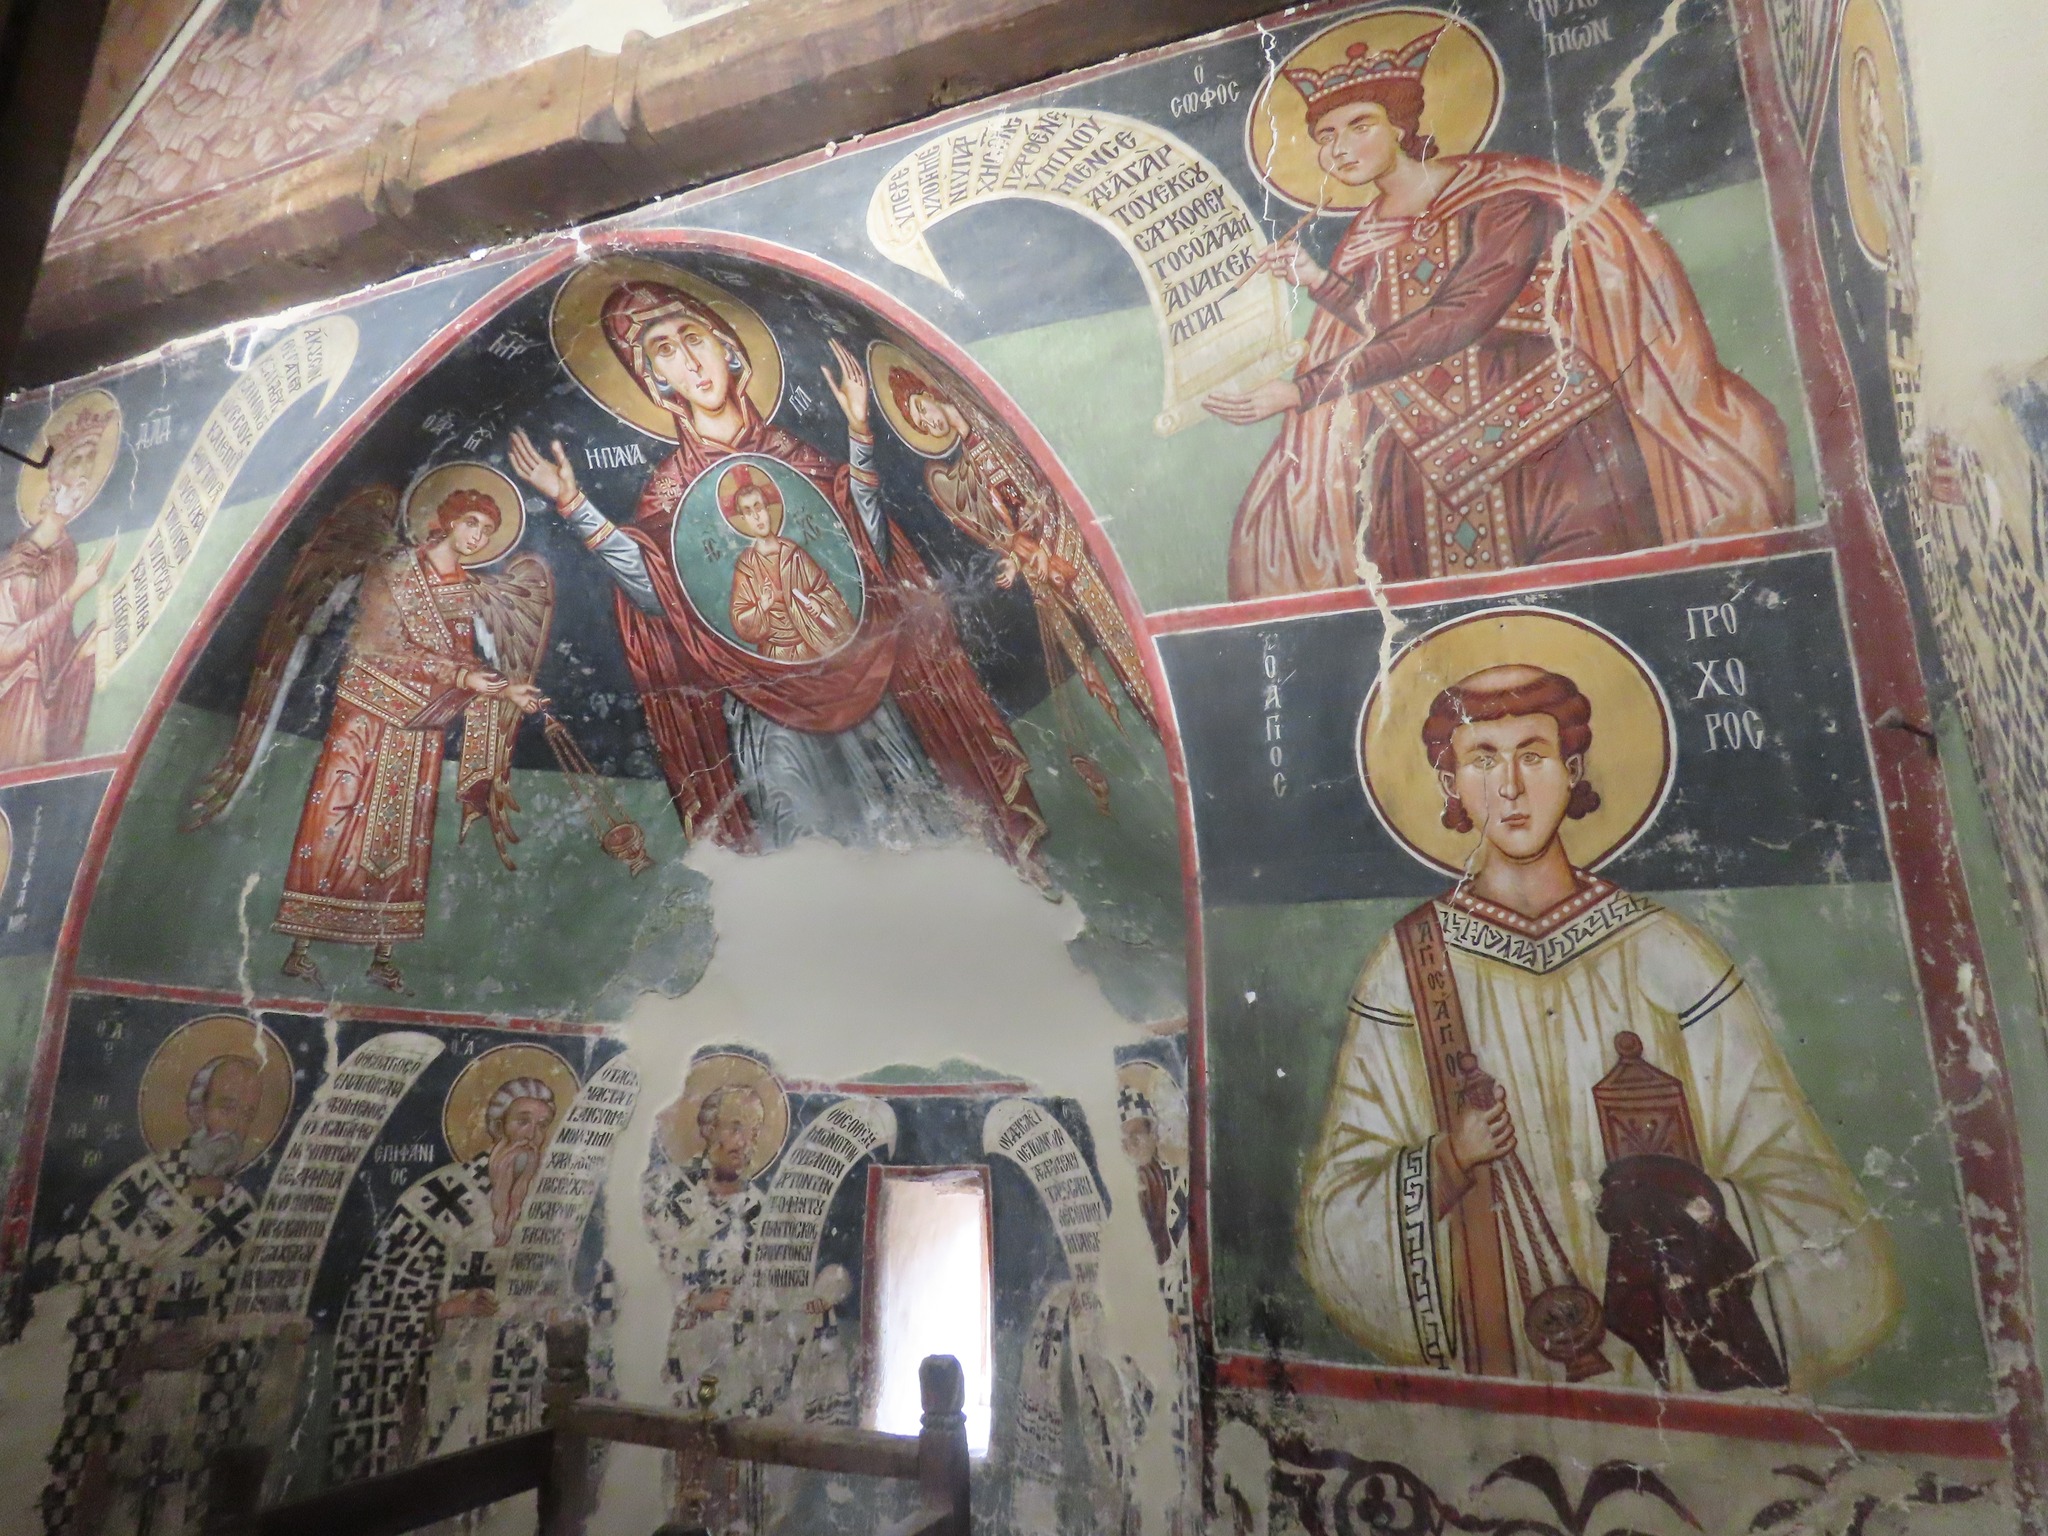 Archangelos Michael Church - ציורי קיר עתיקים בני 550 שנה.jpg